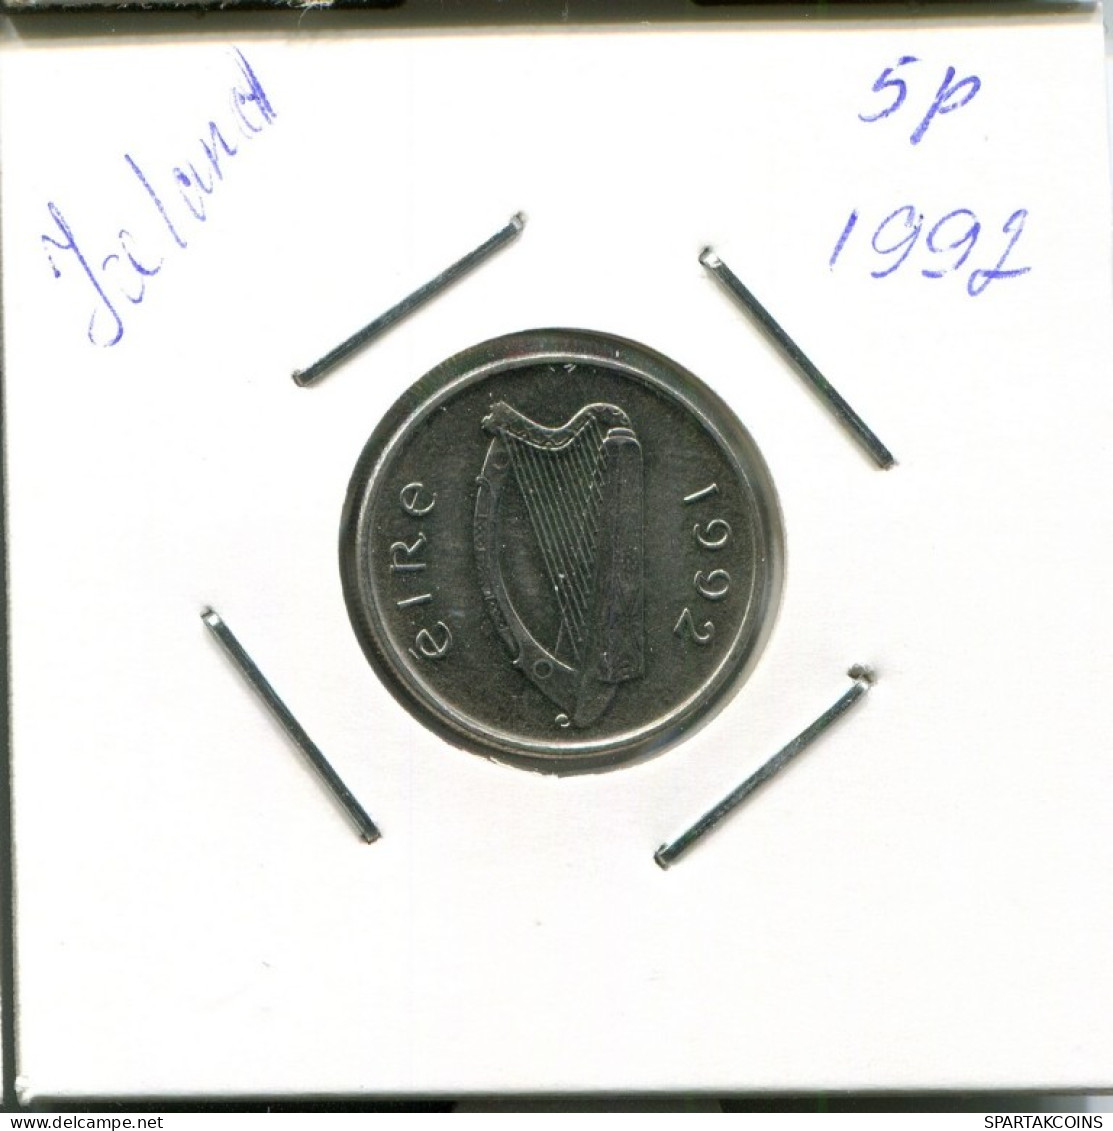 5 PENCE 1992 IRELAND Coin #AN601.U.A - Irland